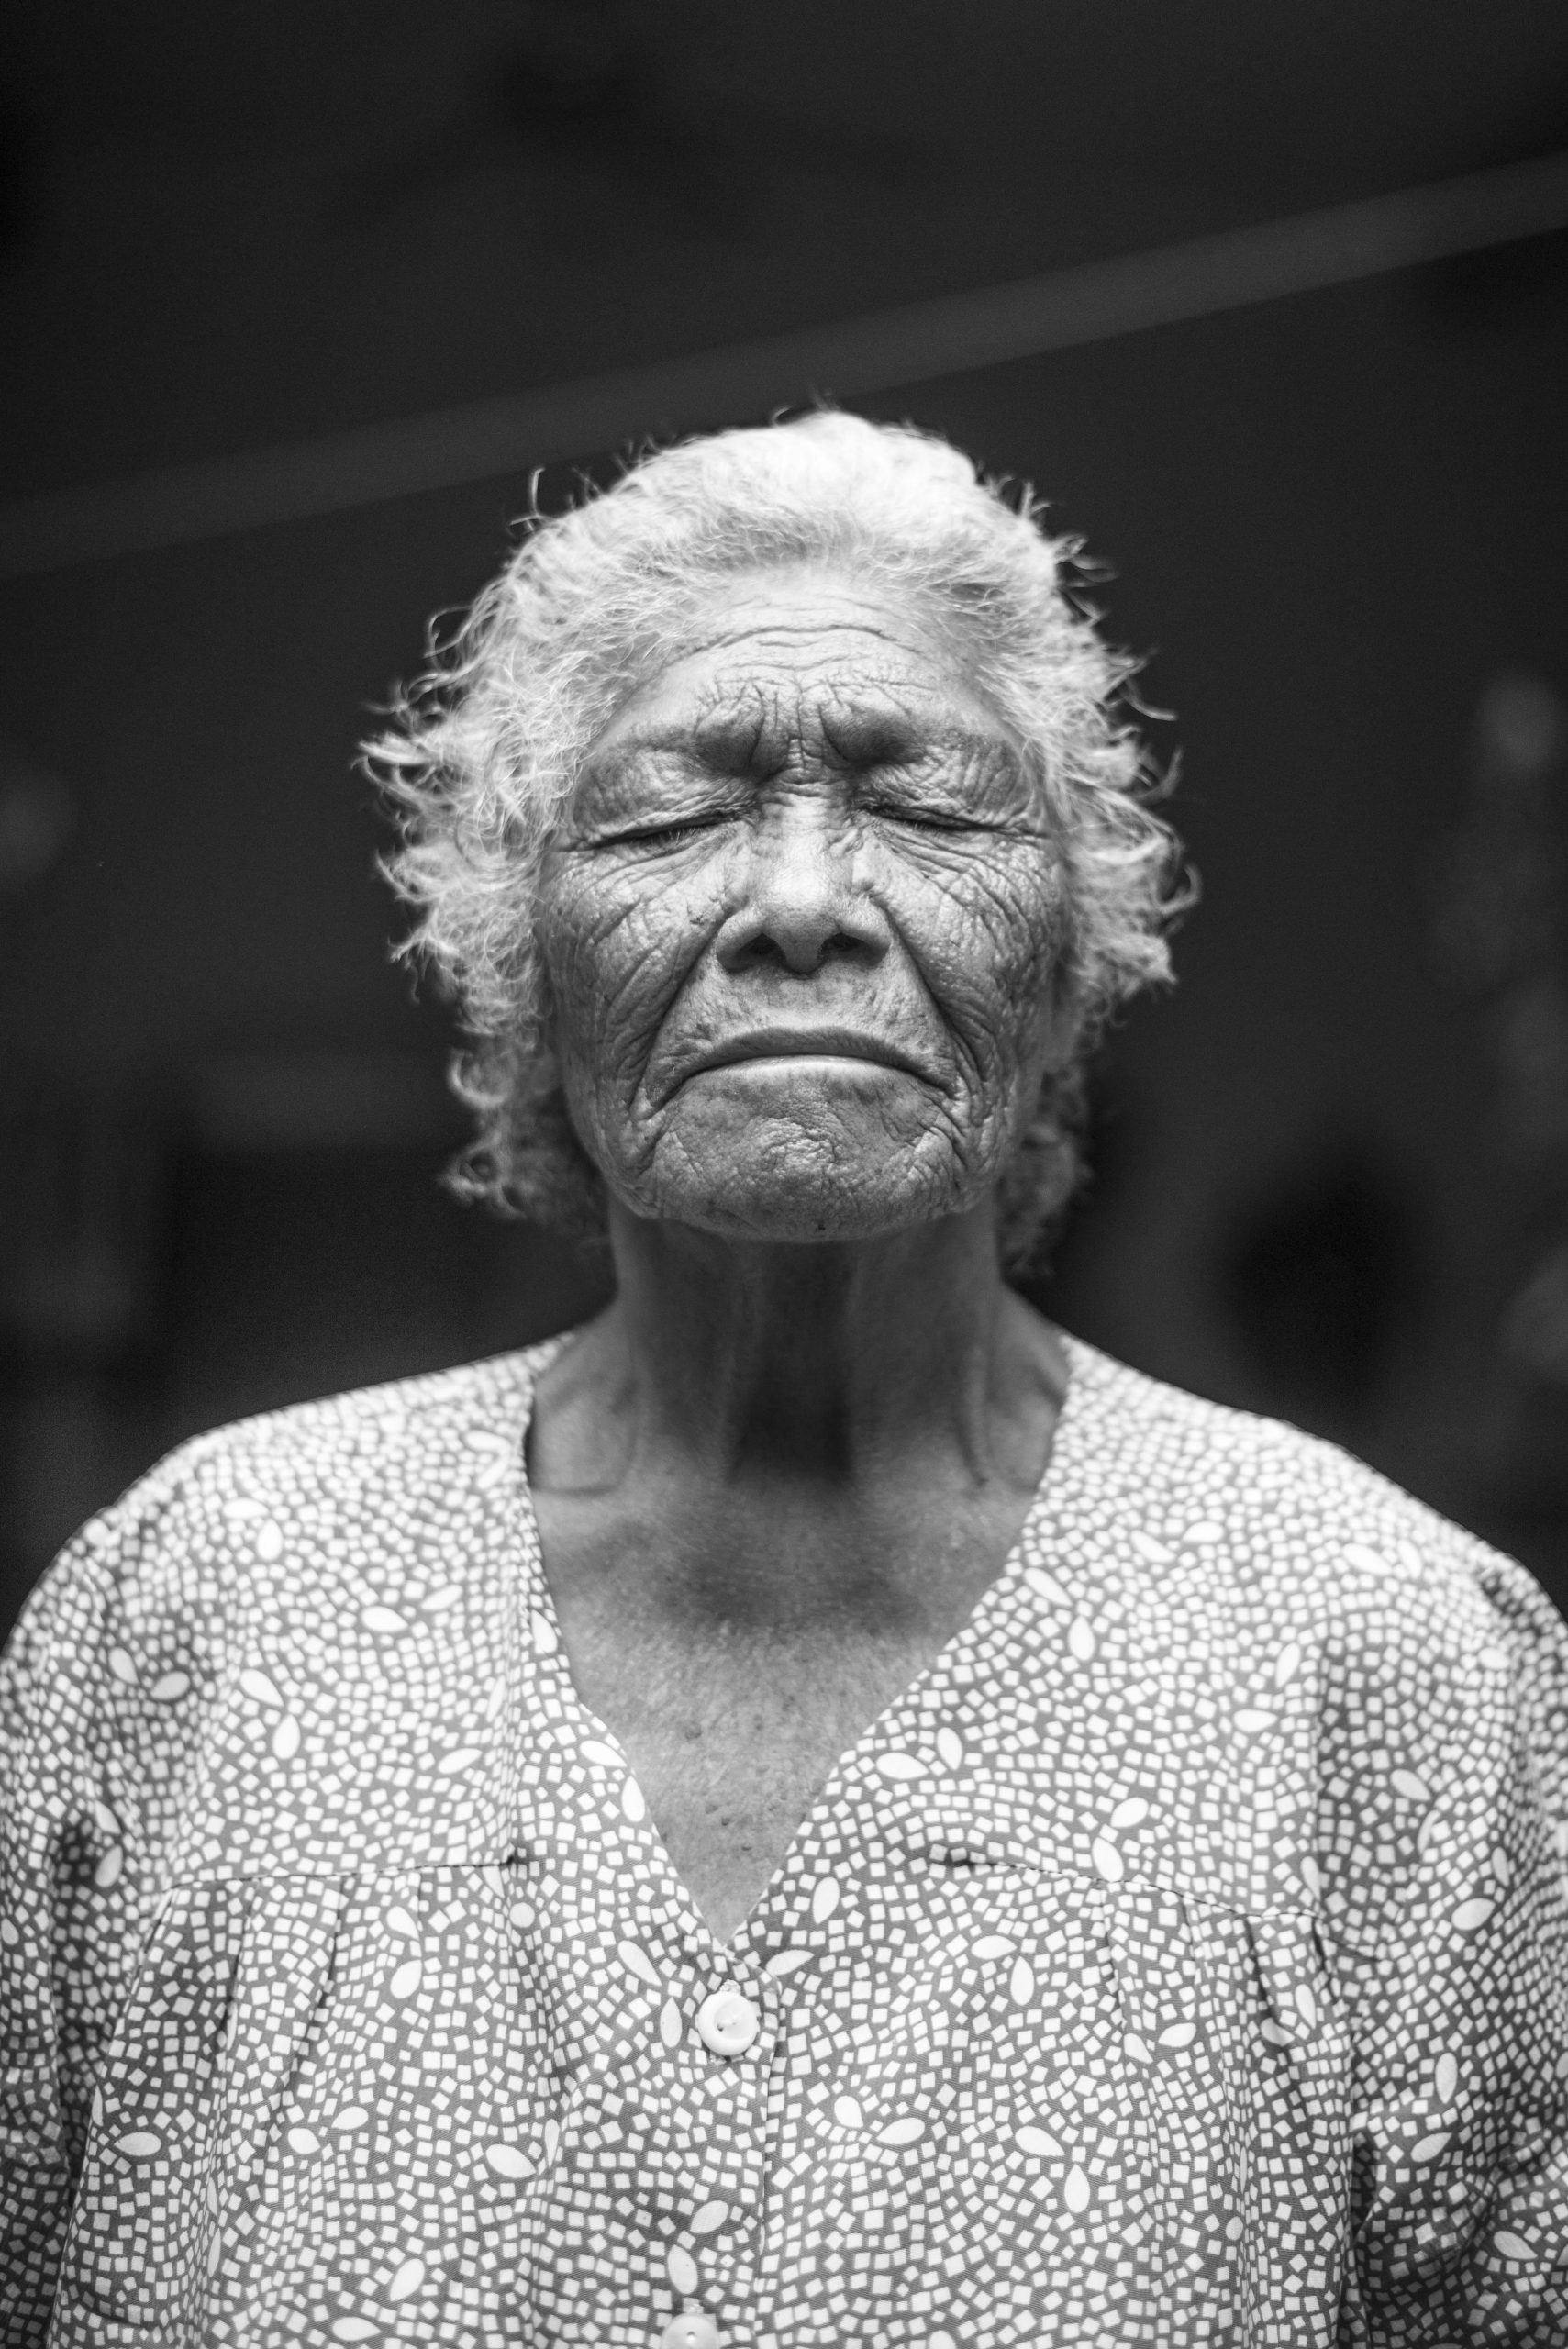 Elder Woman, black and white photography
Ahnenheilung
Quelle: Unsplash / Danie Franco